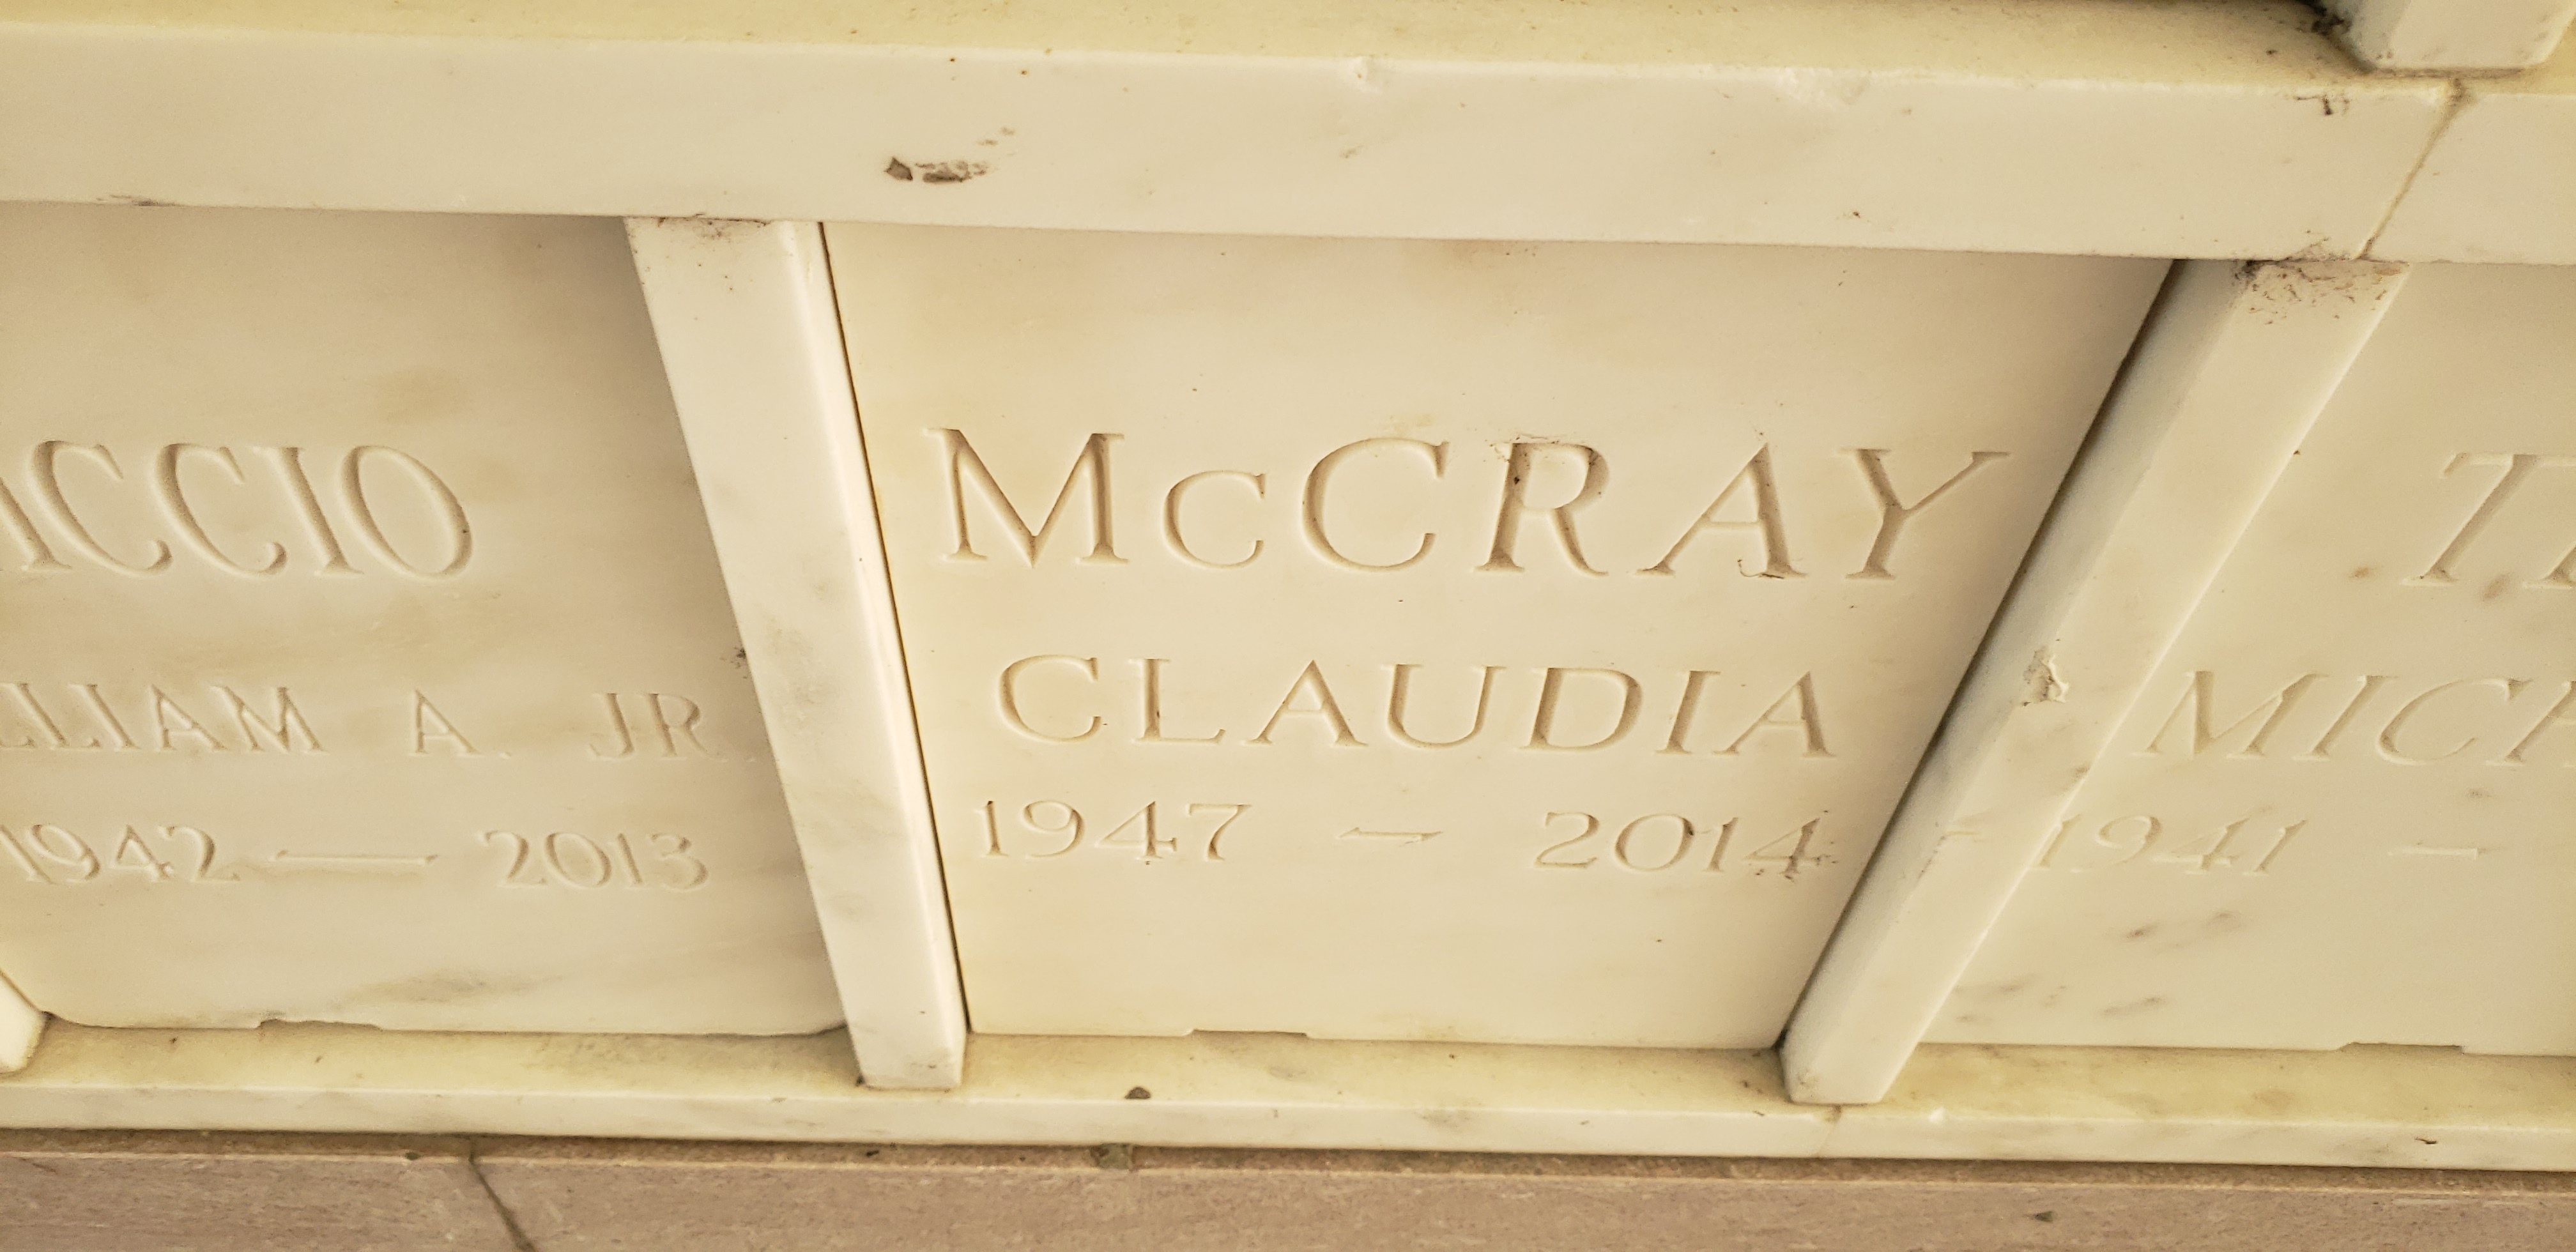 Claudia McCray